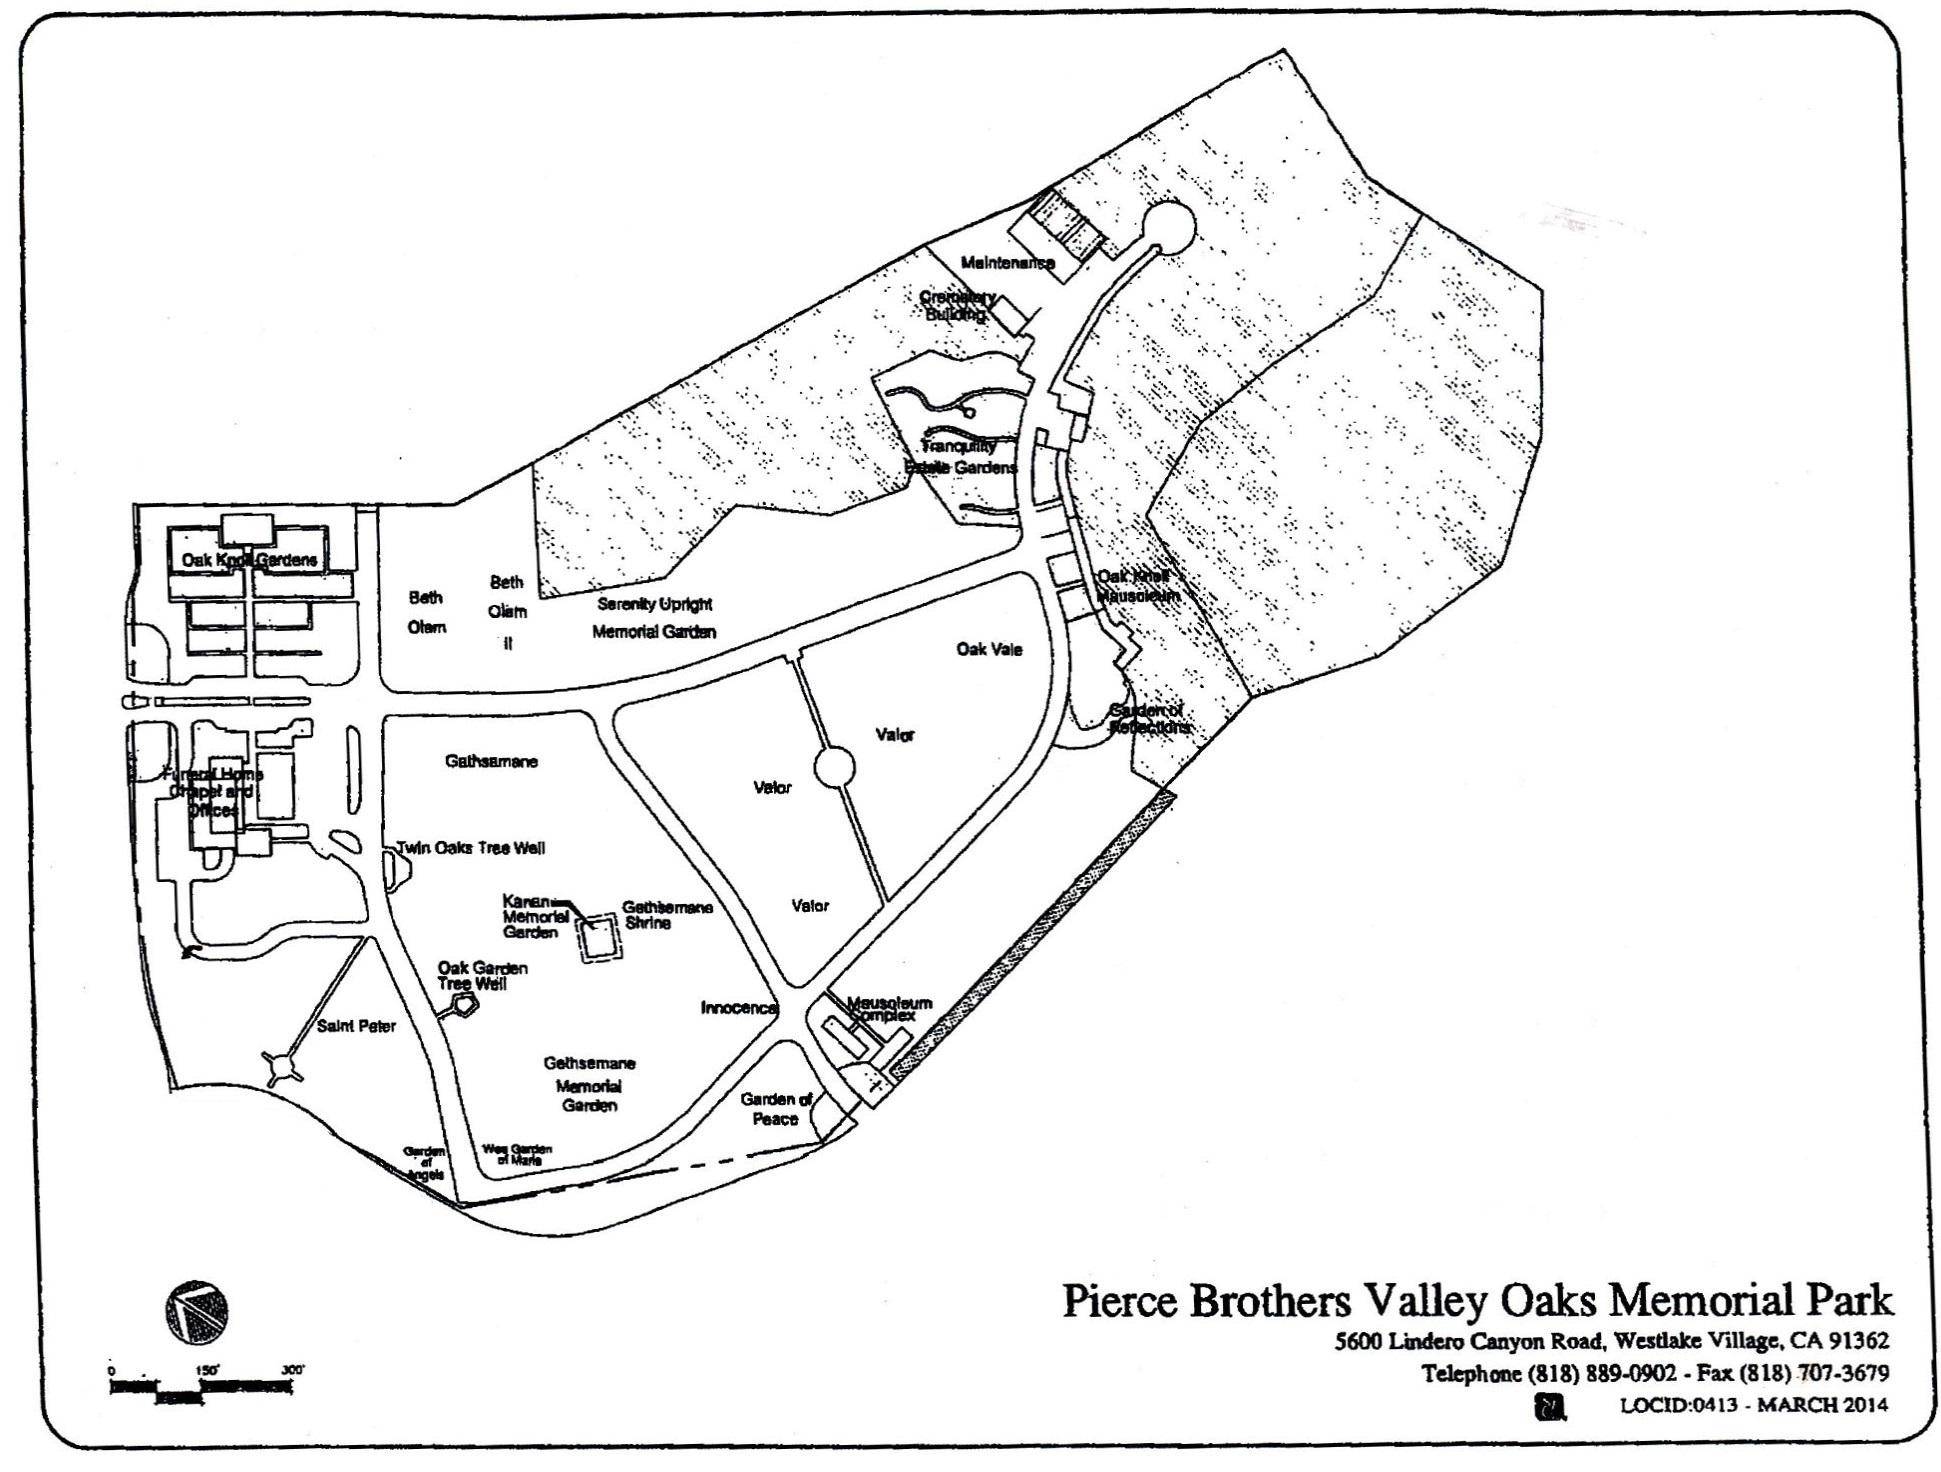 Map of Pierce Brothers Valley Oaks Memorial Park in Westlake Village, California